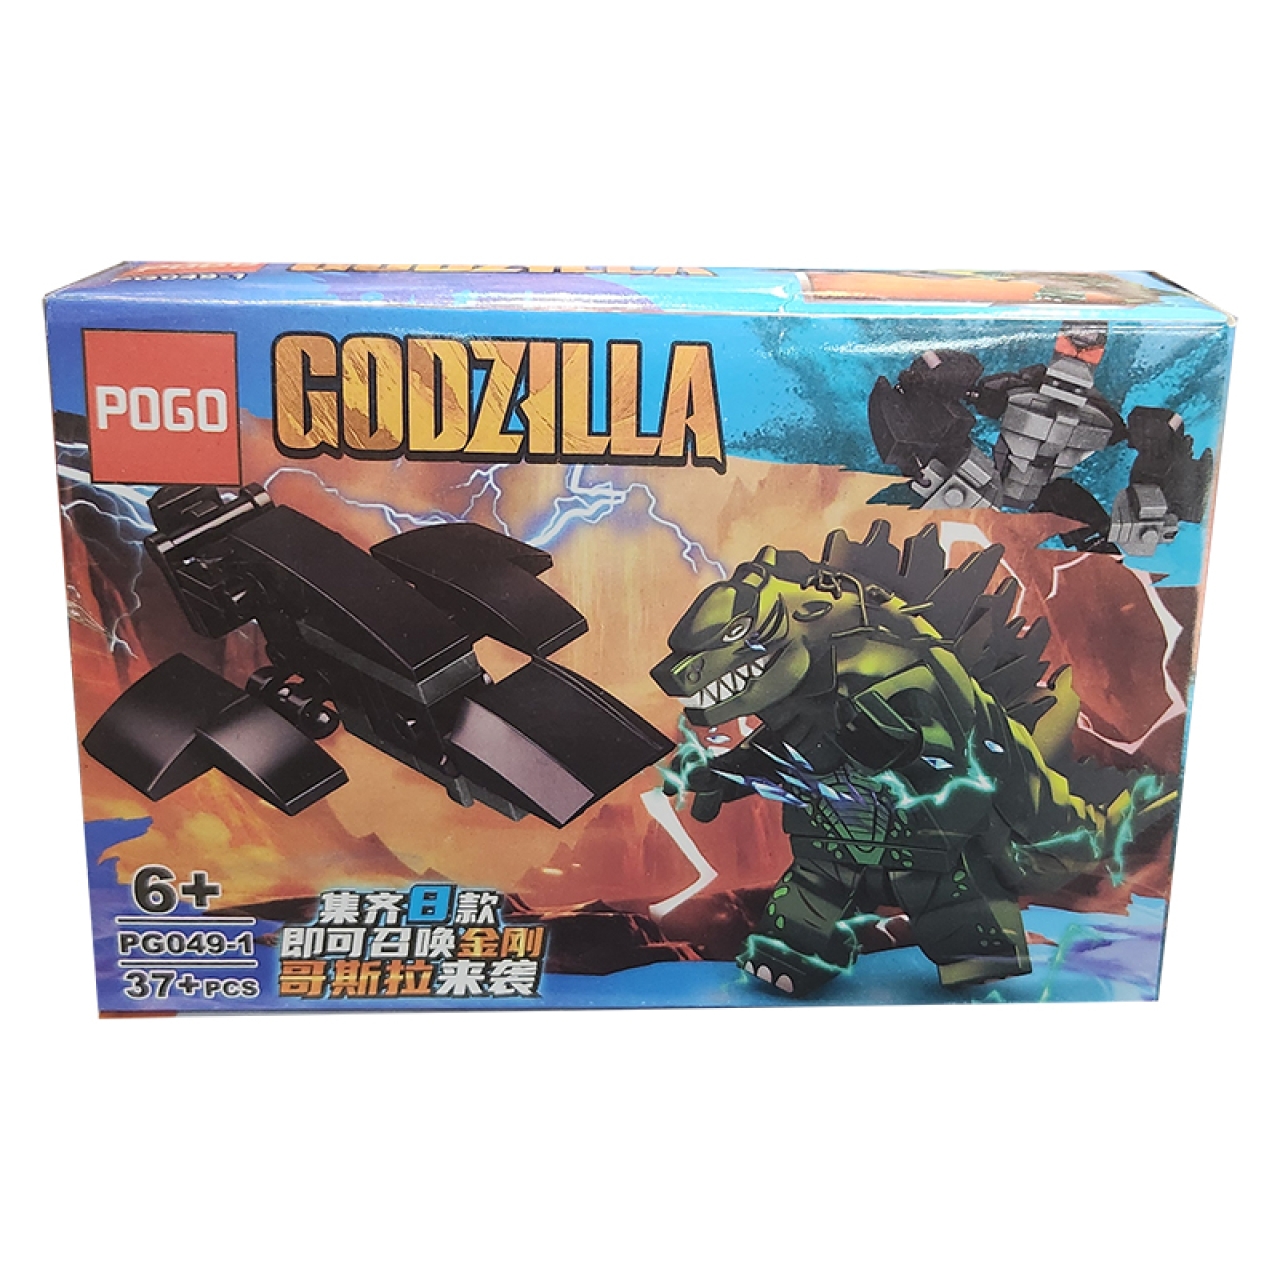 ساختنی پوگو مدل Godzilla کد 0491